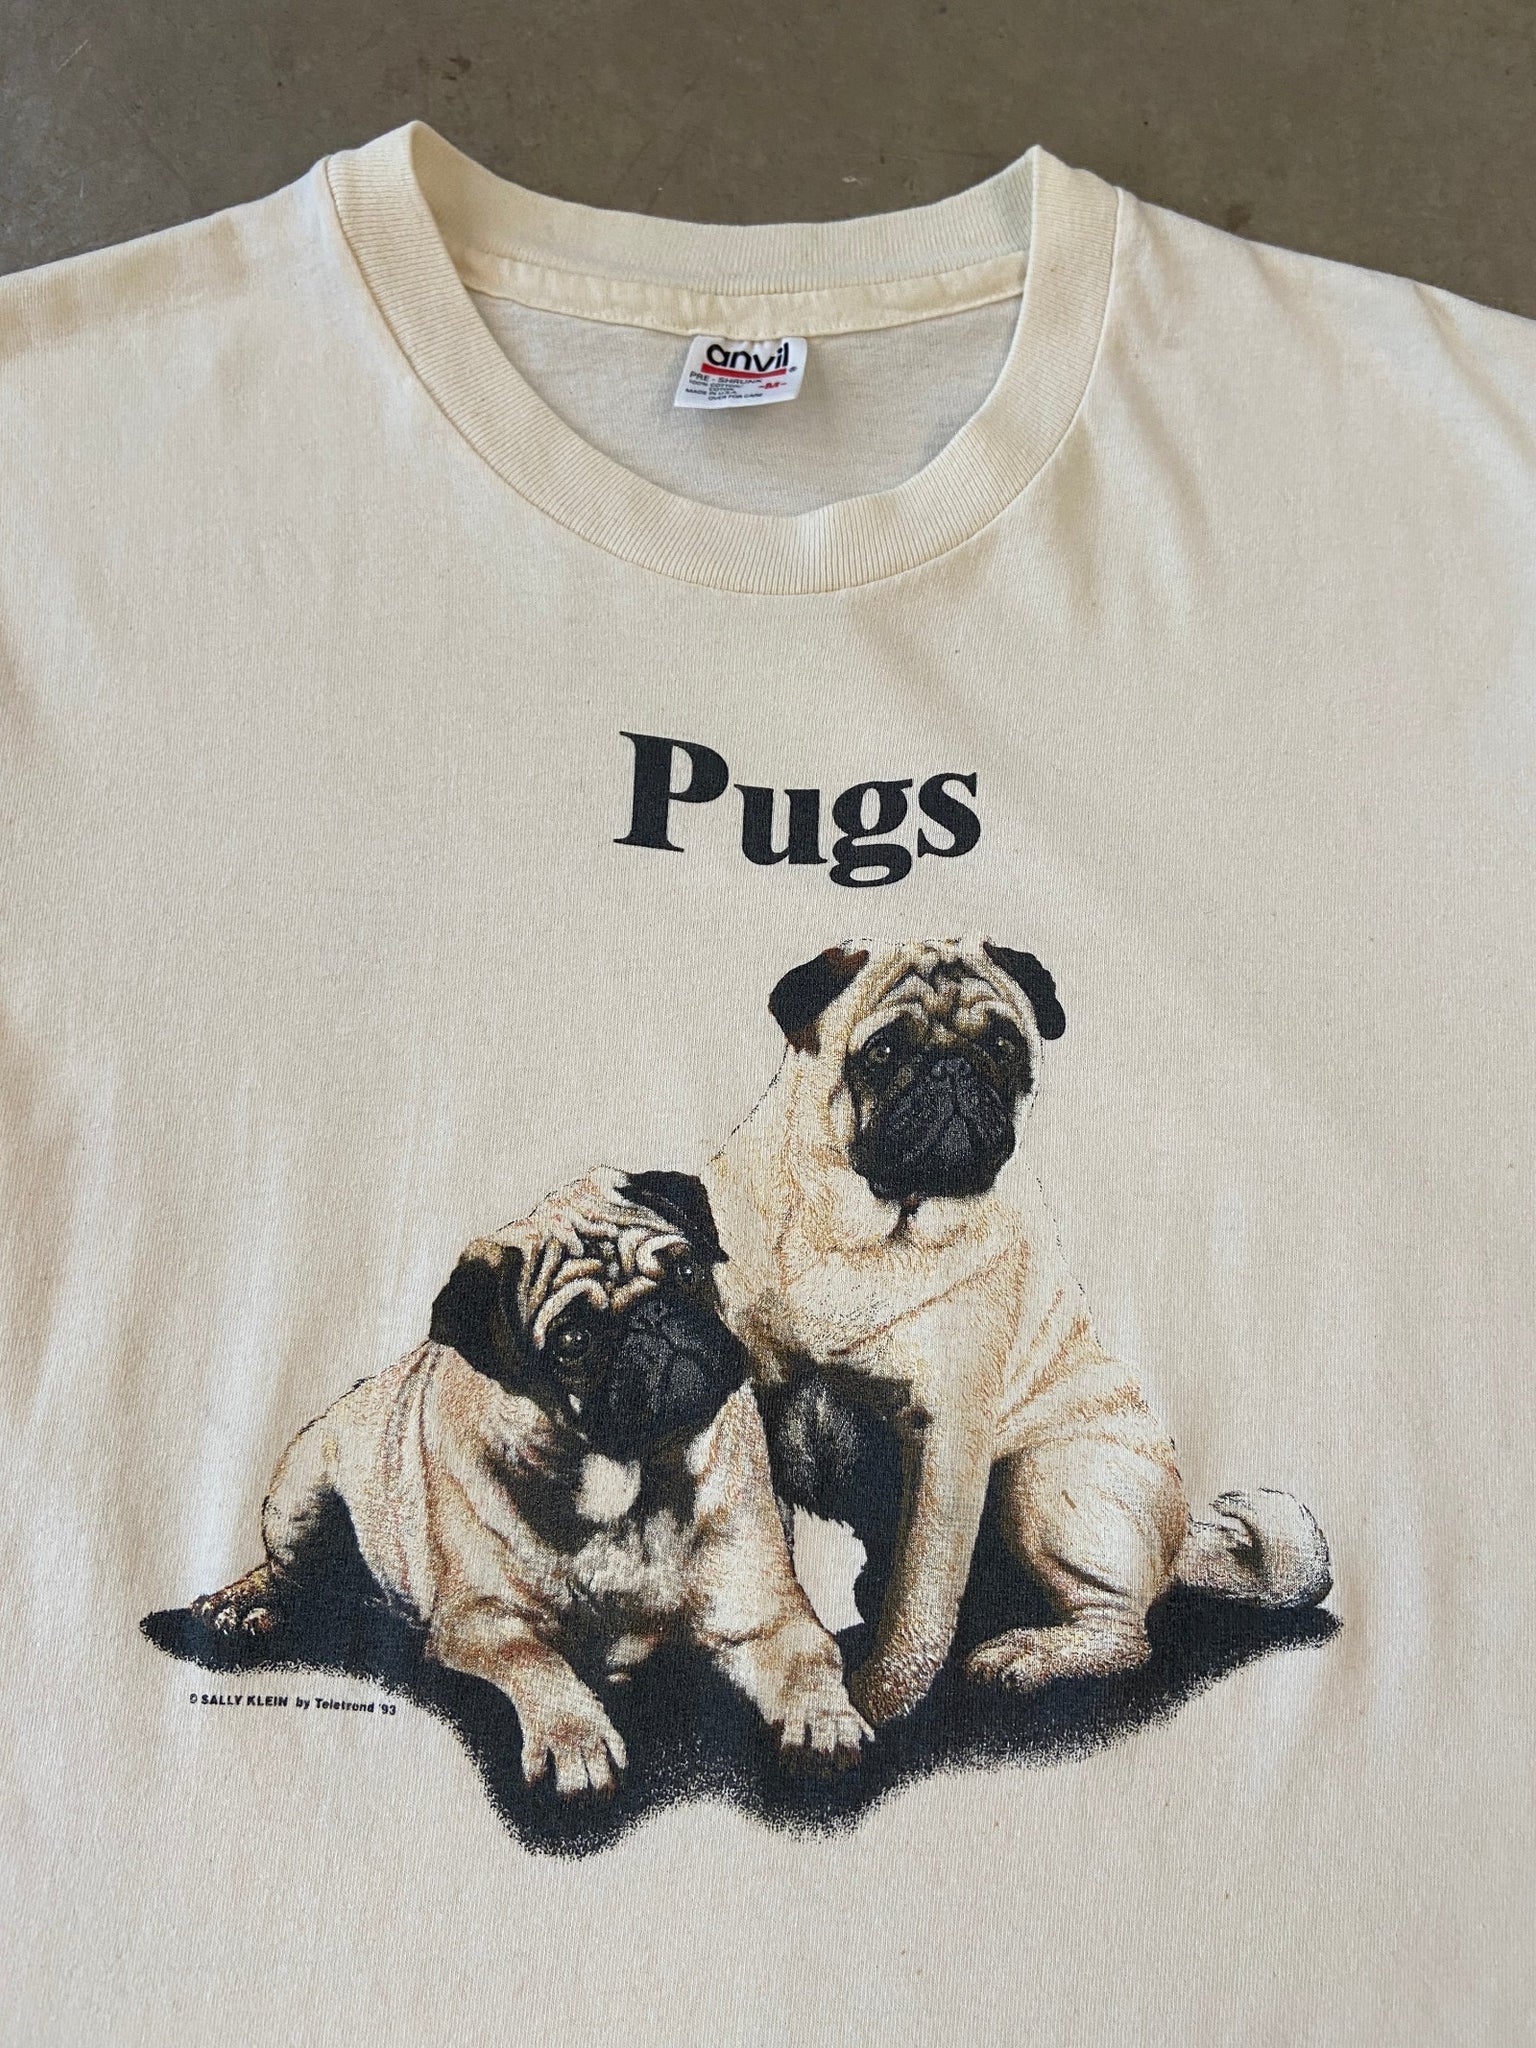 1993 Pugs T-shirt - M